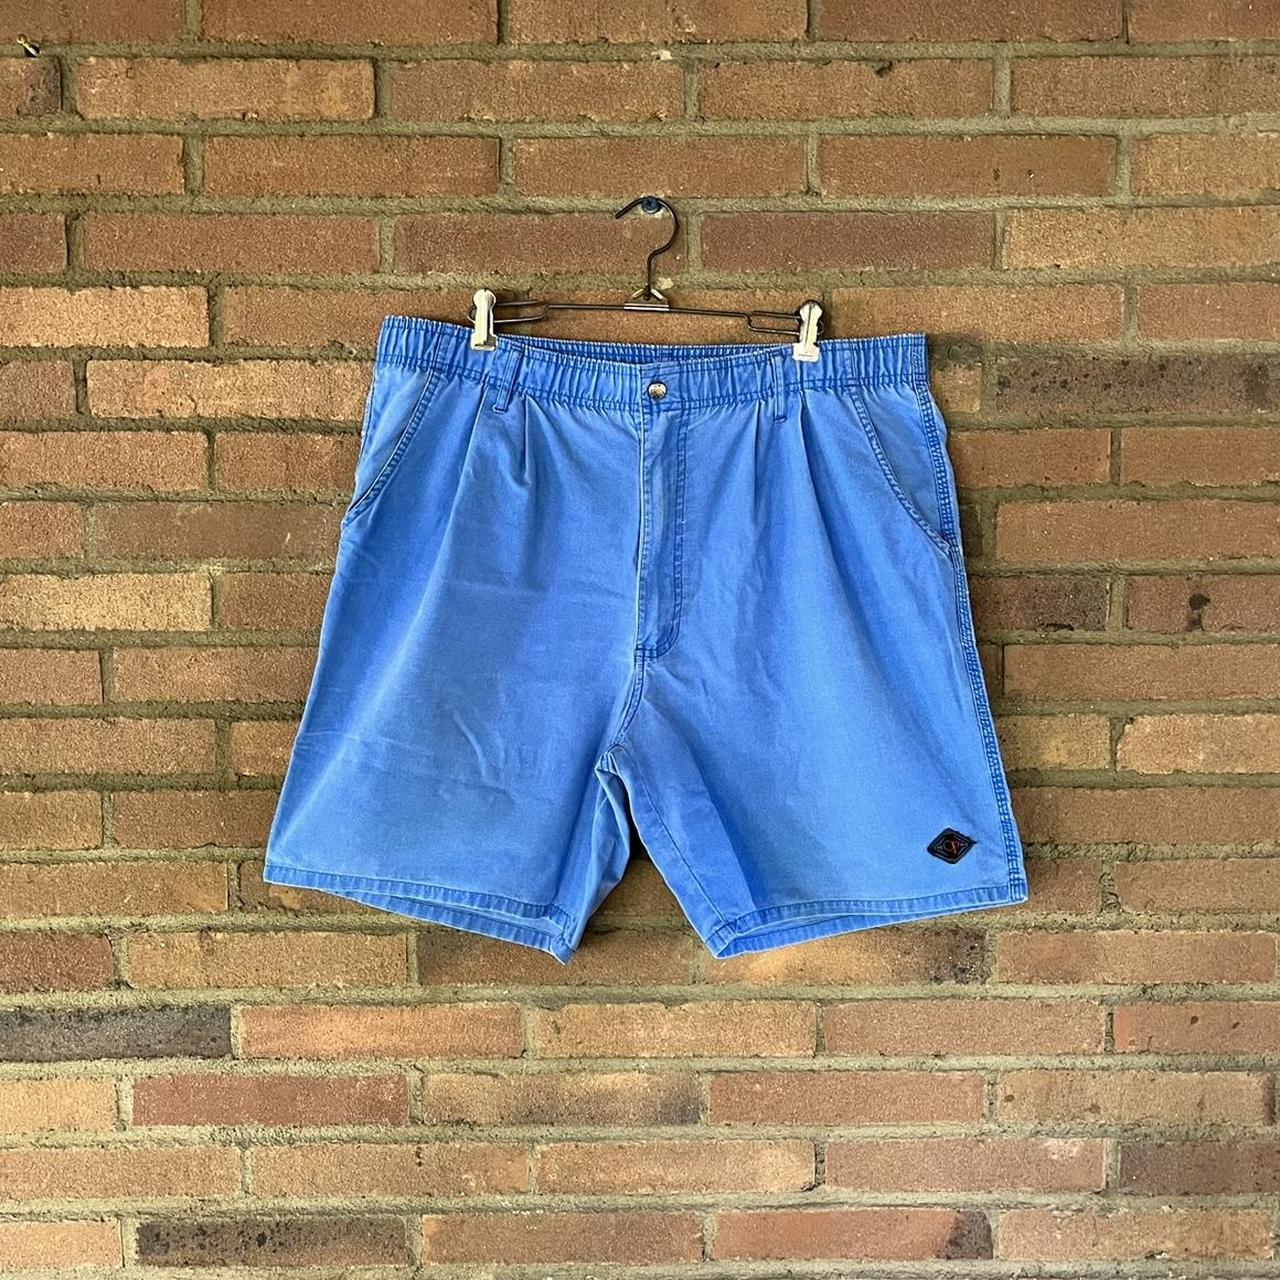 Ocean Pacific Men's Blue Shorts | Depop